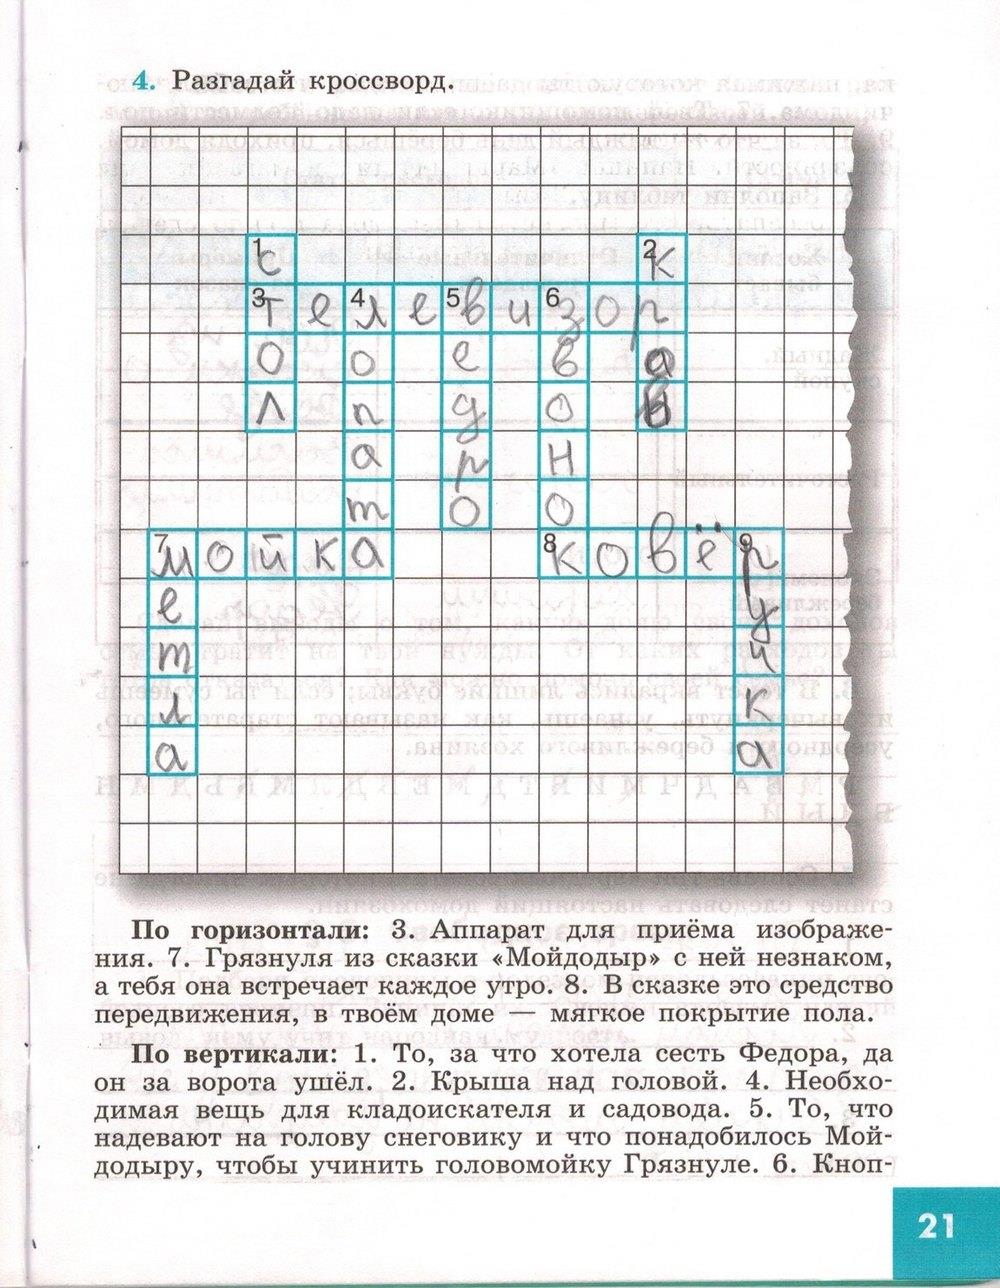 гдз 5 класс рабочая тетрадь страница 21 обществознание Иванова, Хотеенкова